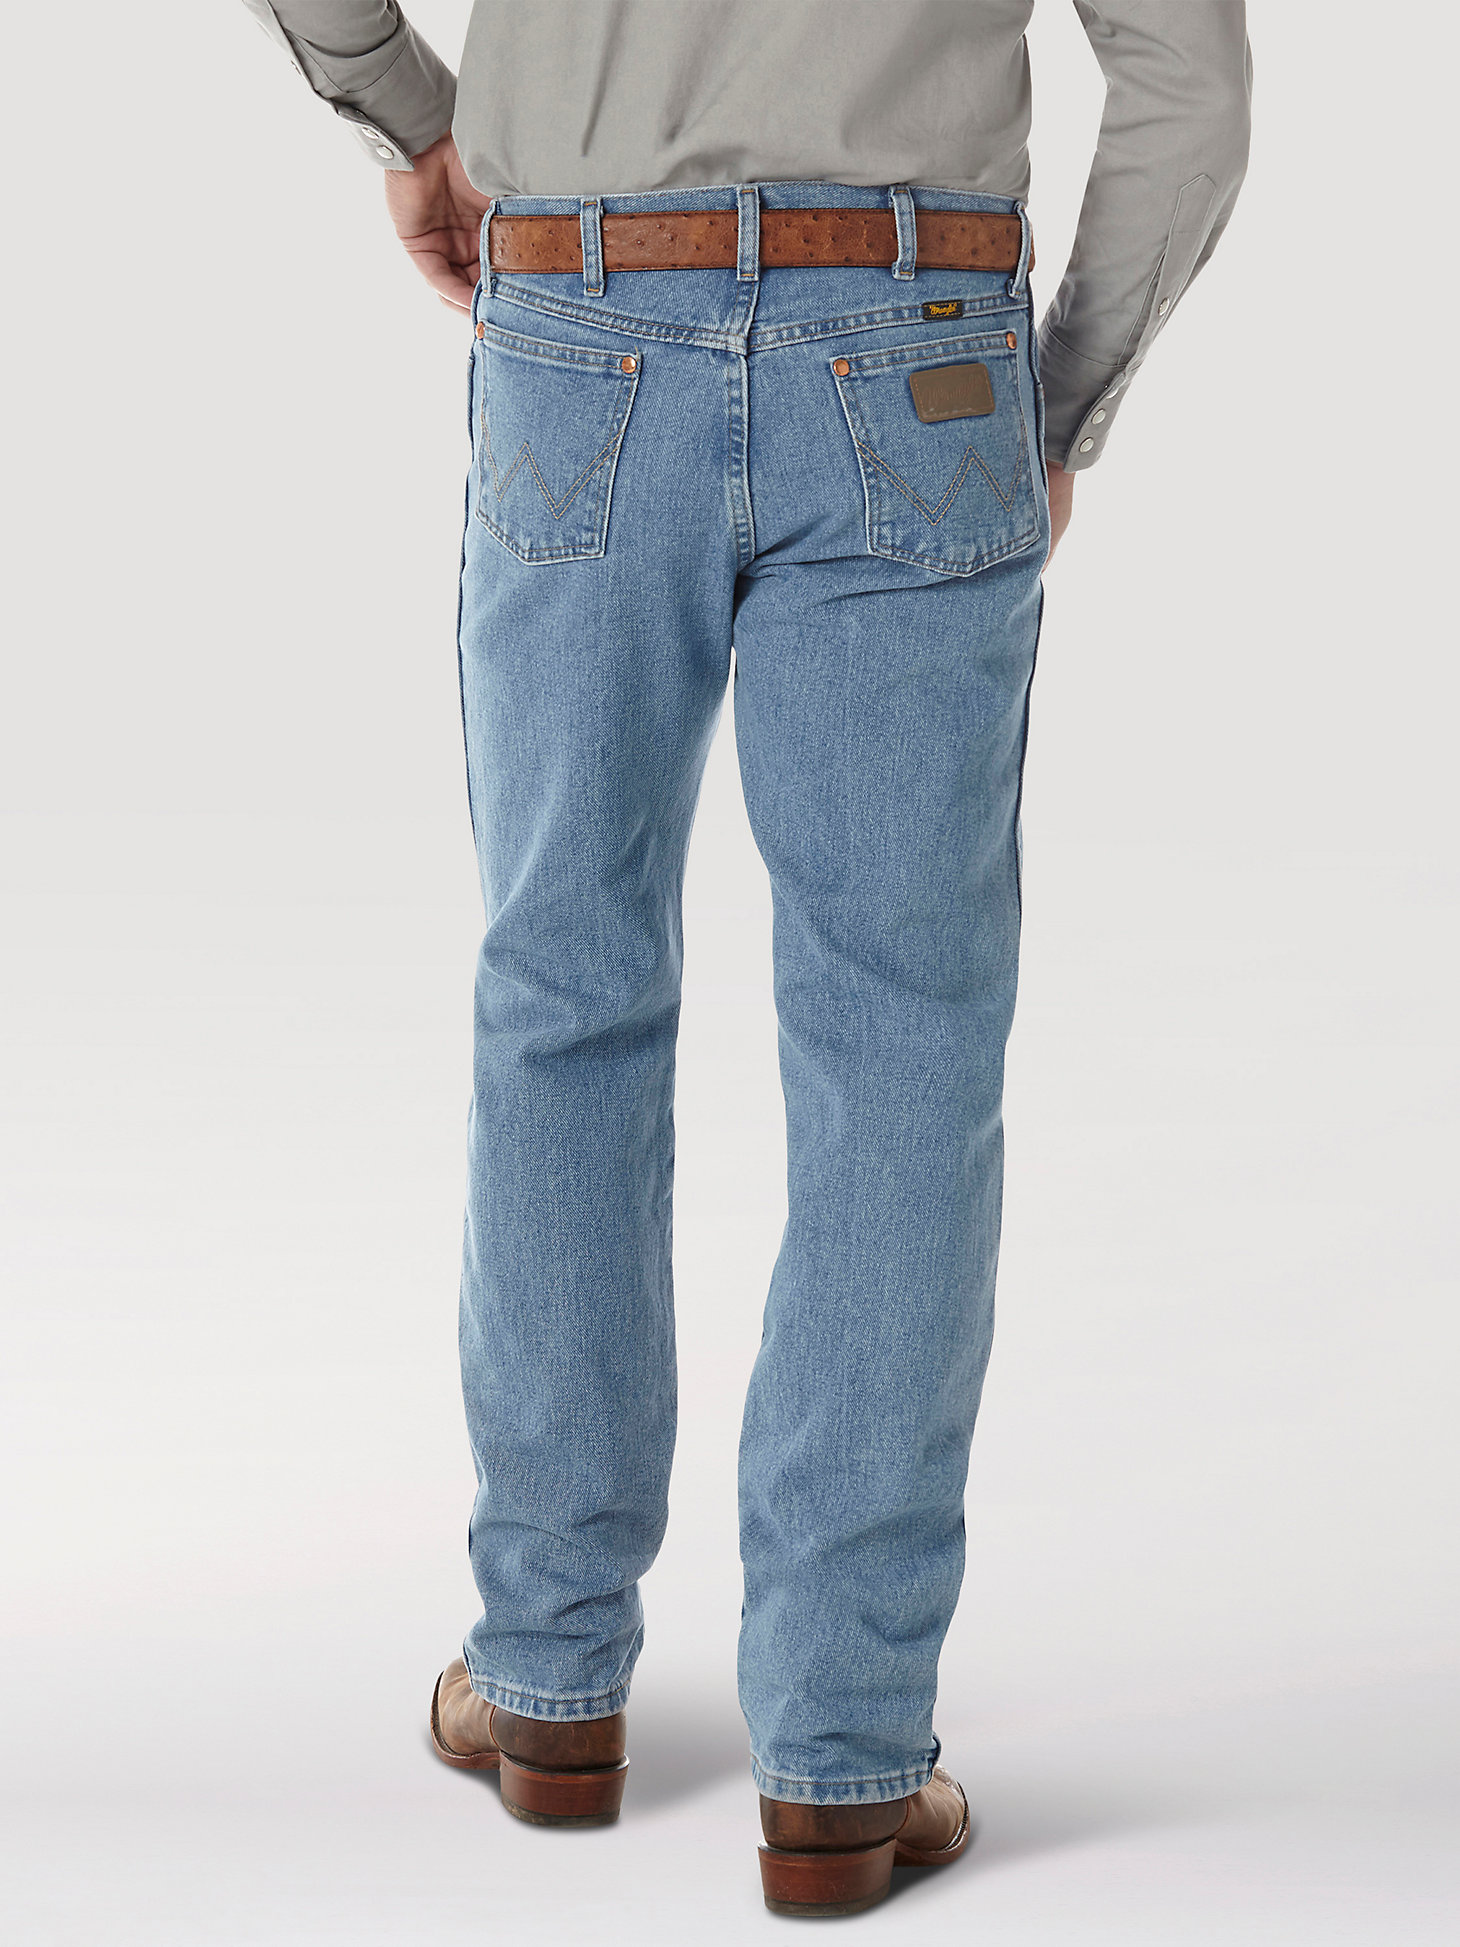 Wrangler® Cowboy Cut® Original Fit Jean in Antique Wash alternative view 4